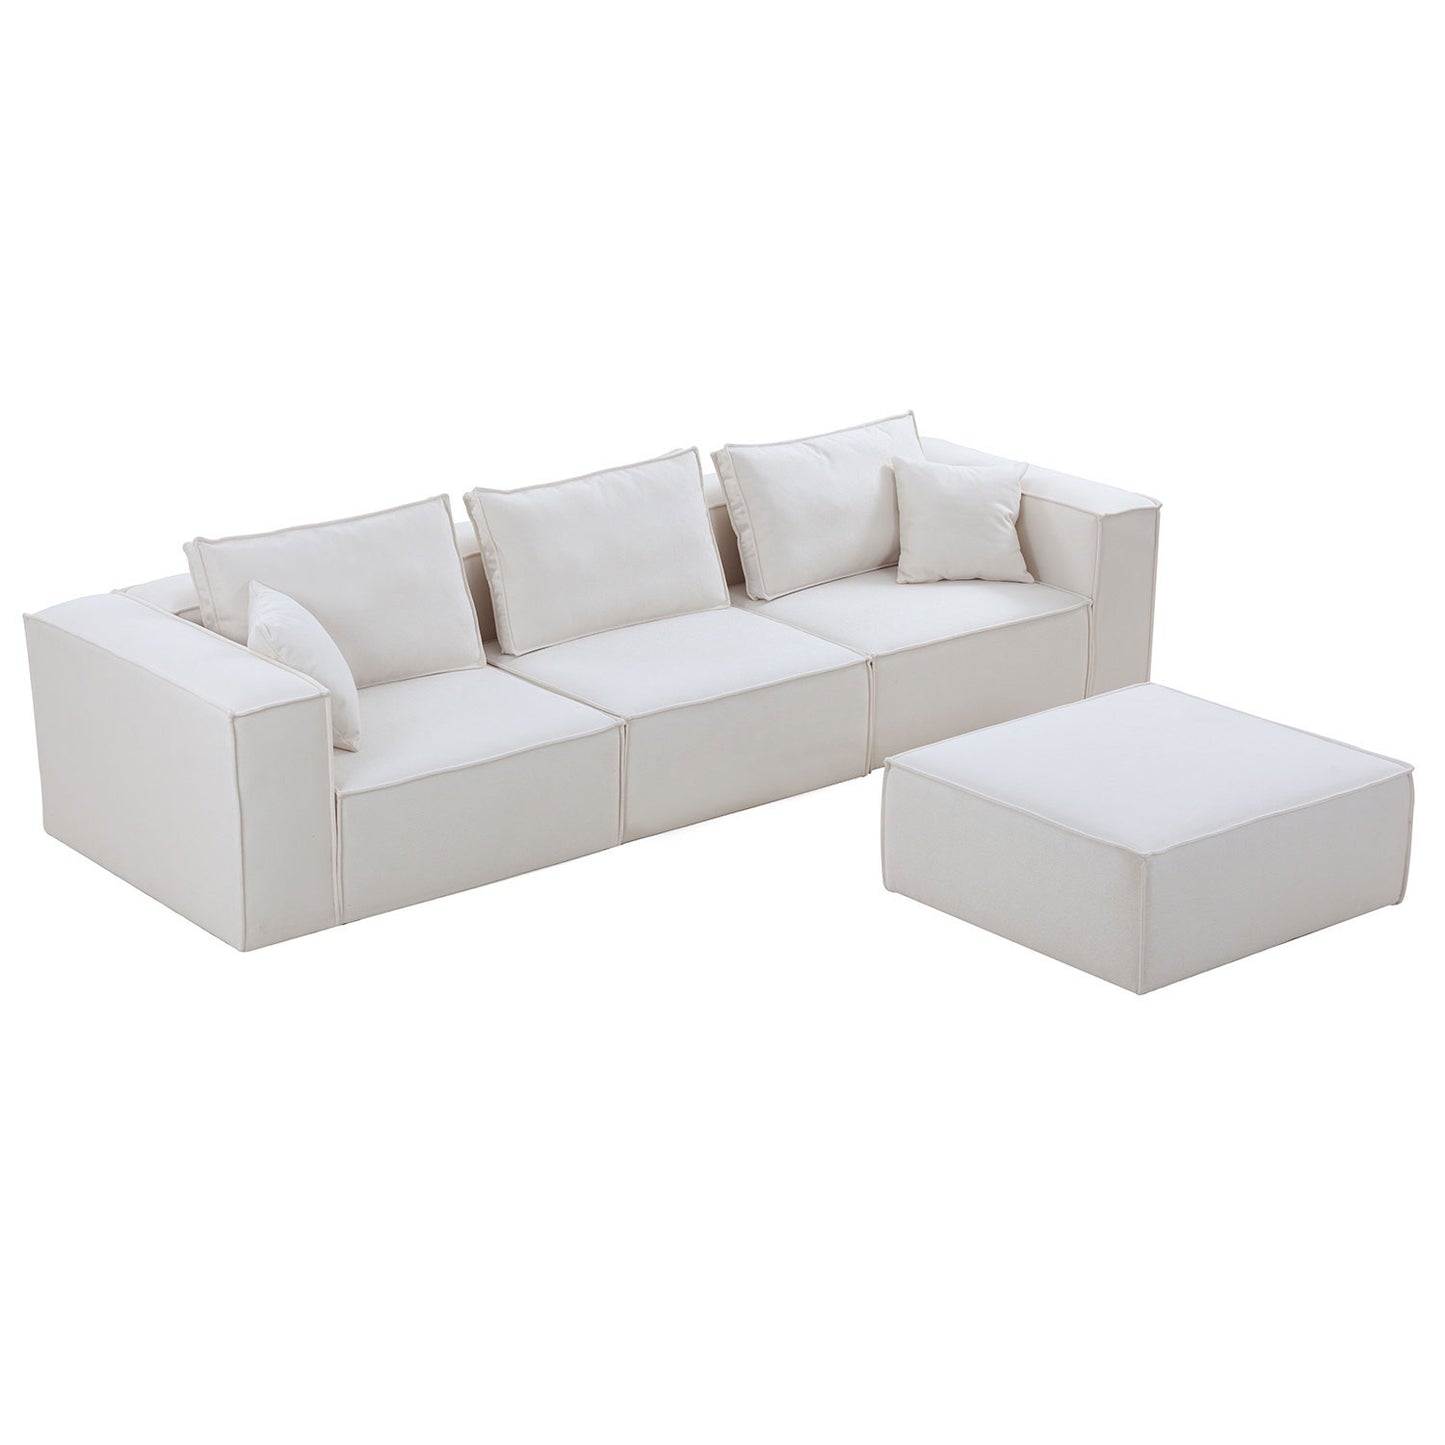 Justone Interior 4 Pc Modular Fabric Sectional Sofa - White